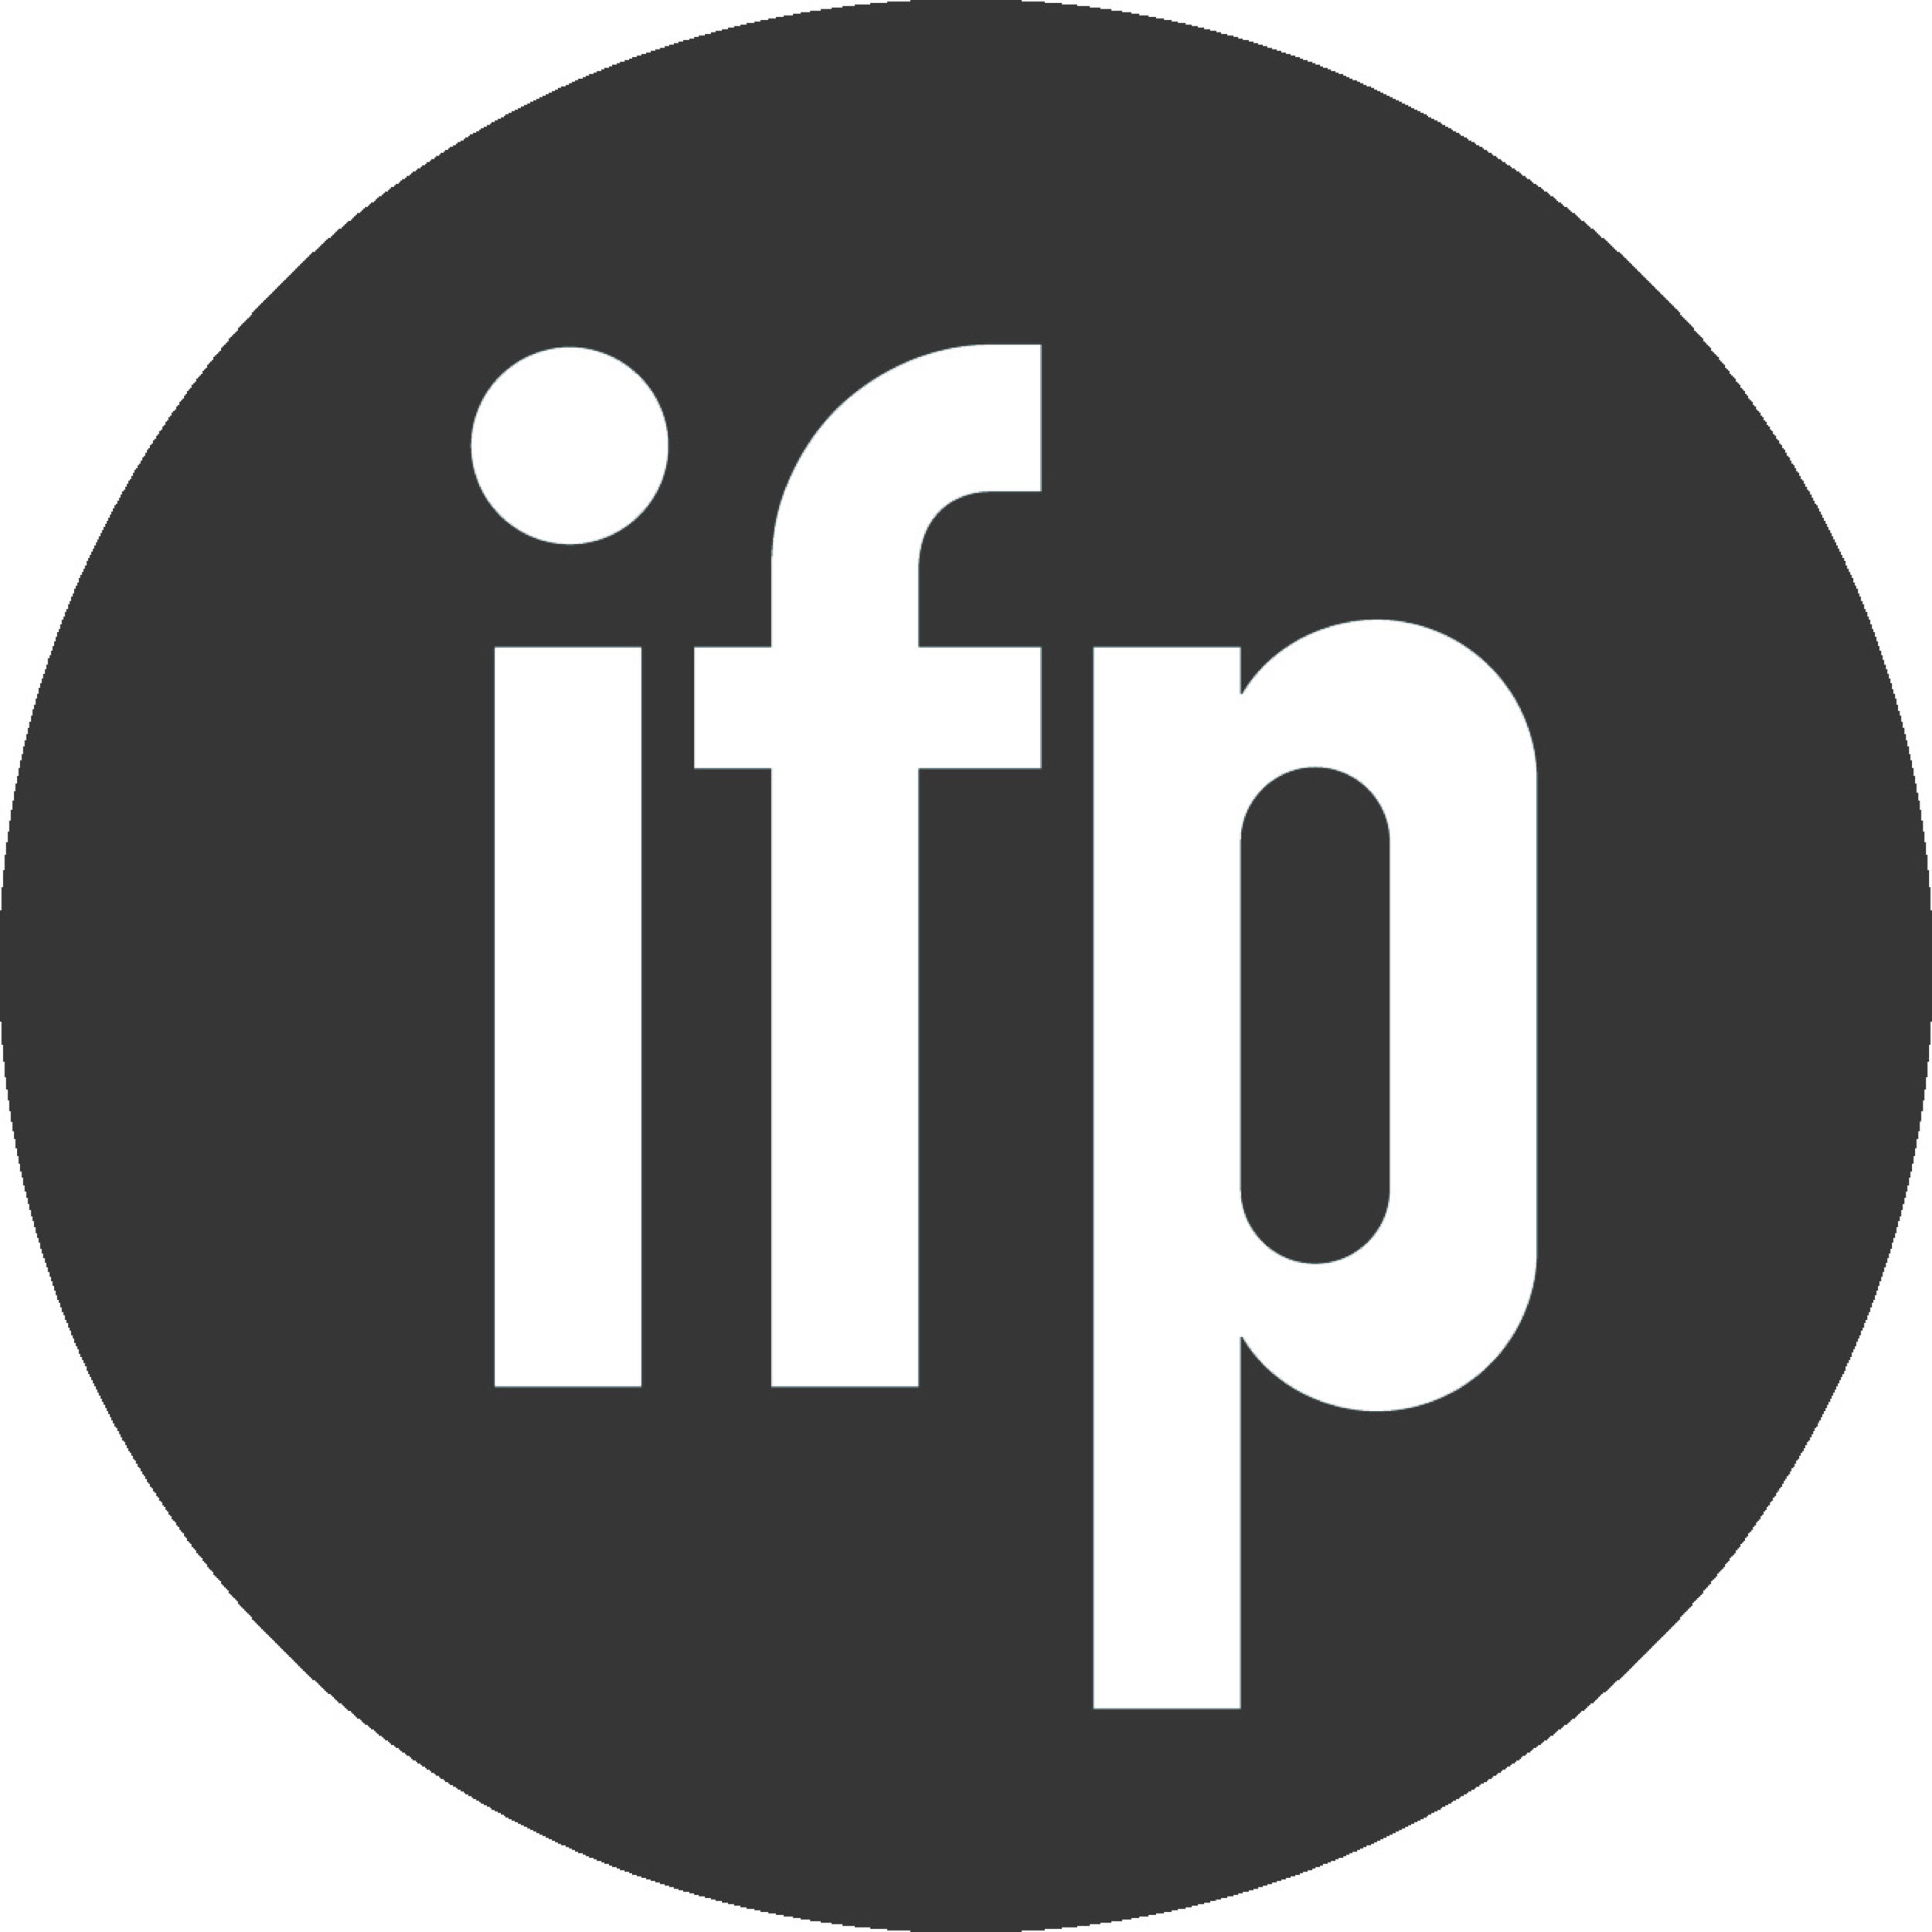 IFP logo black.jpg